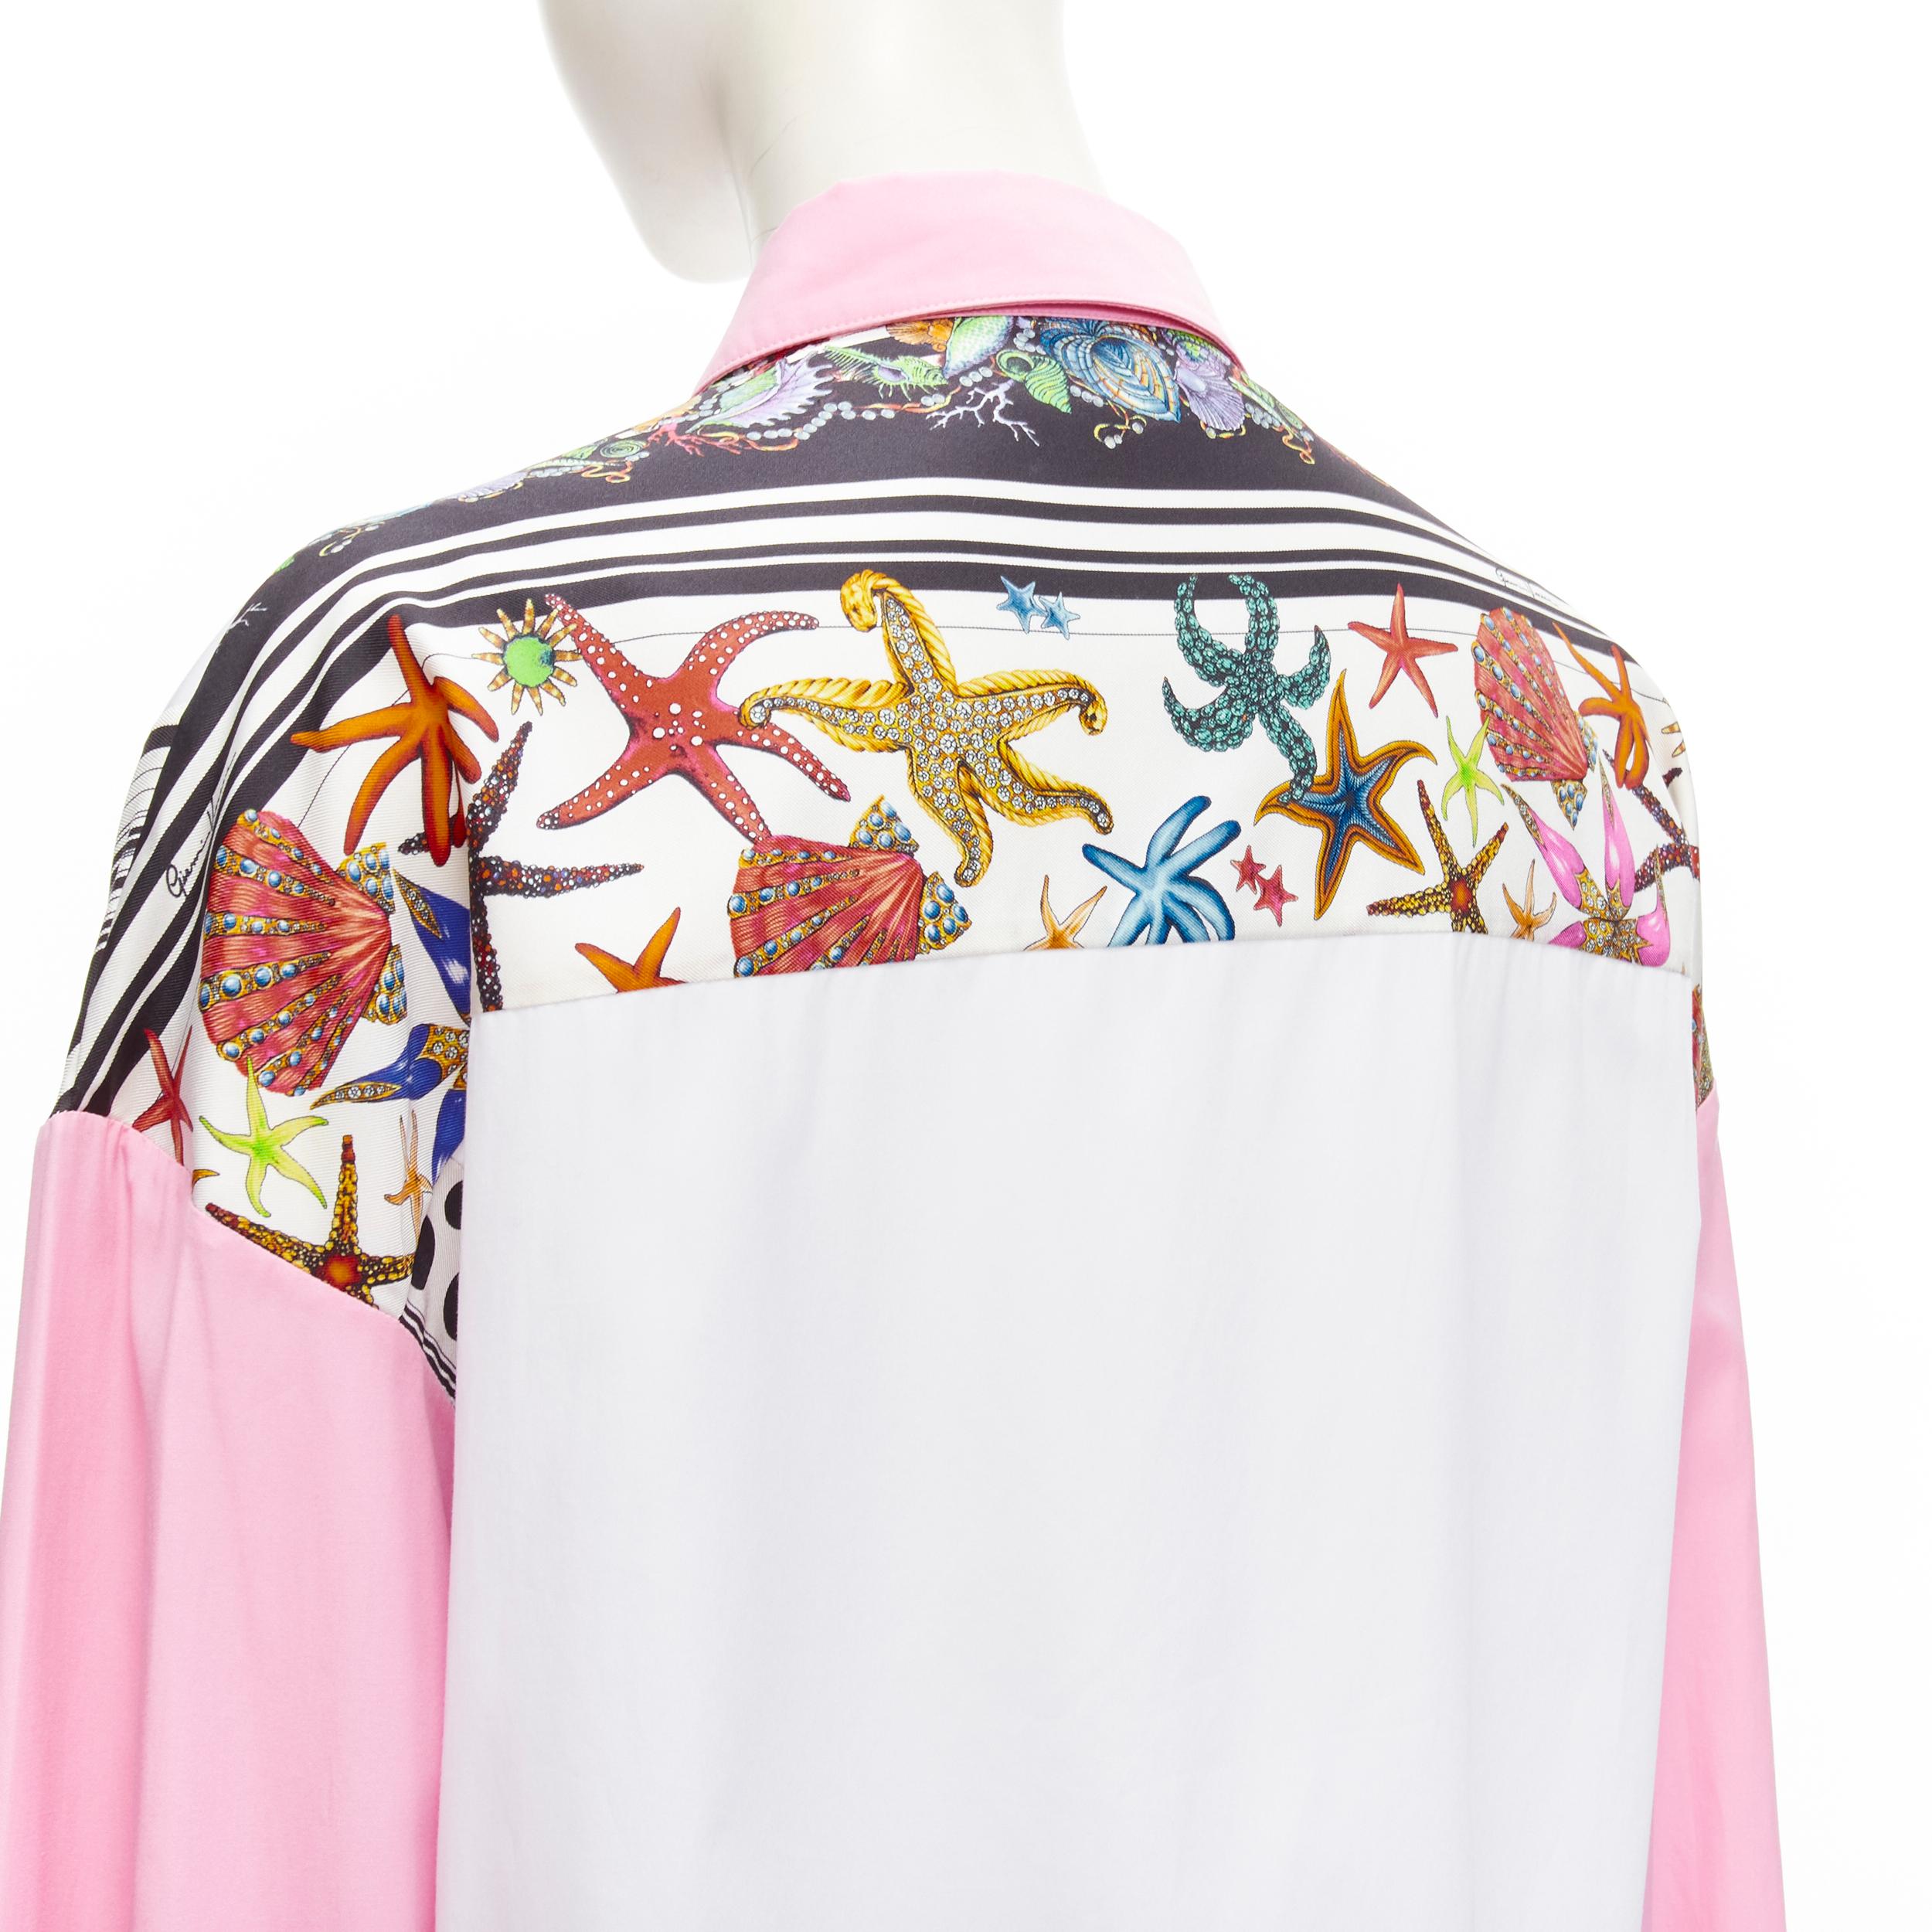 new VERSACE Tresor De La Mer 2021 starfish pink white colorblock shirt IT44 L
Reference: TGAS/C01915
Brand: Versace
Designer: Donatella Versace
Collection: 2021 Tresor De La Mer
Material: Cotton
Color: White, Pink
Pattern: Starfish
Closure: